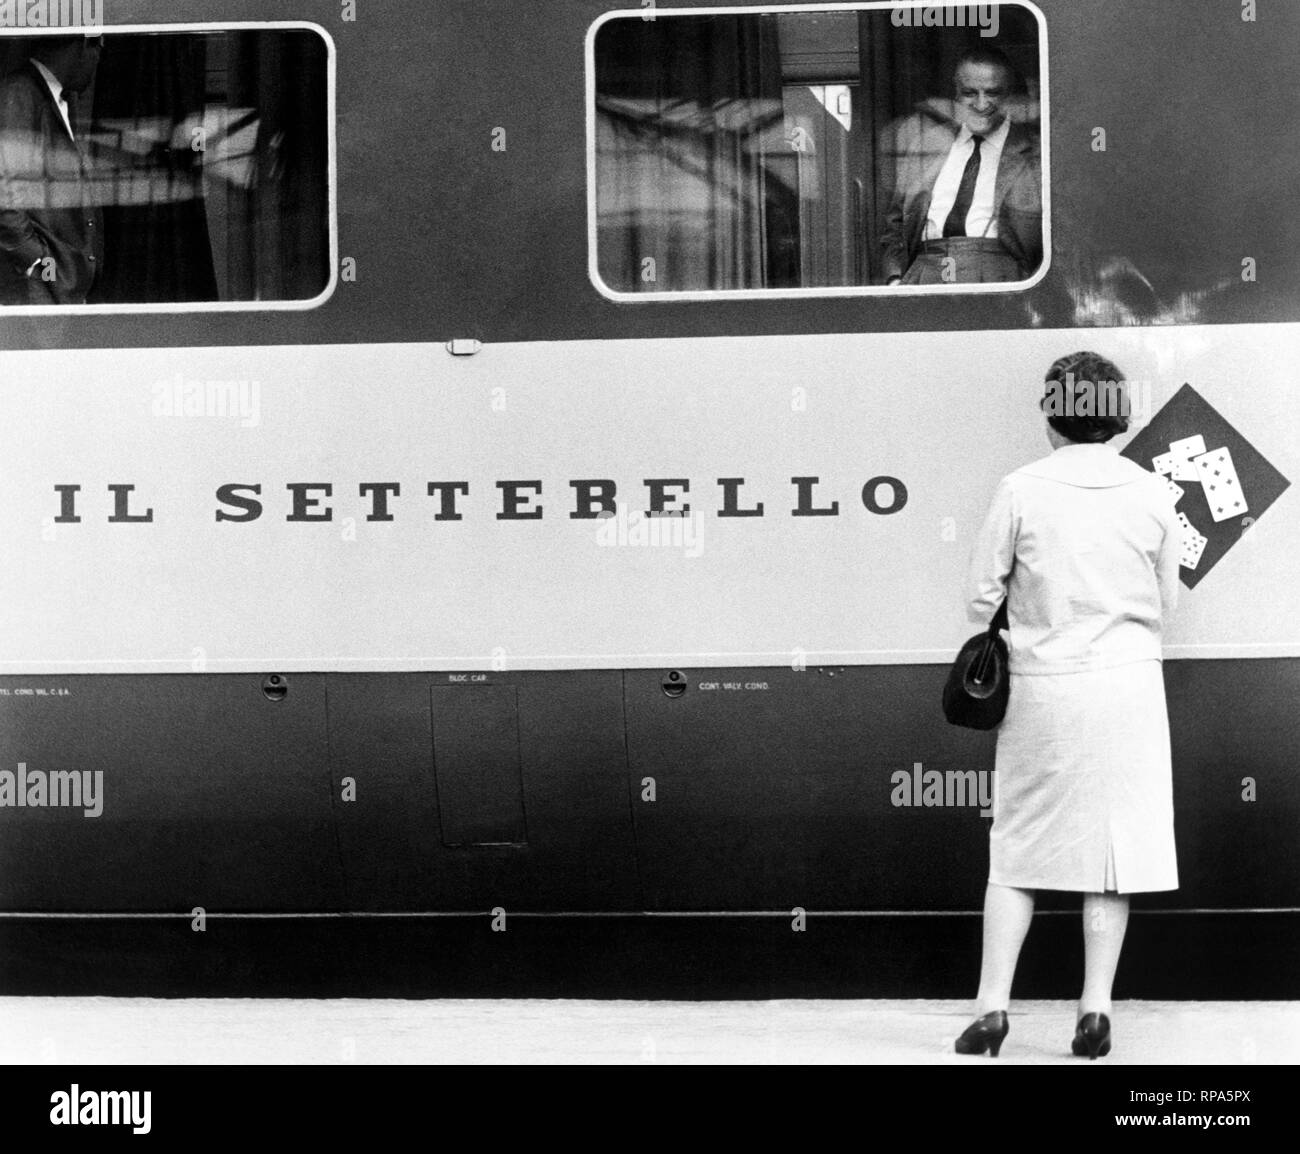 etr 300 settebello, italy 1963 Stock Photo